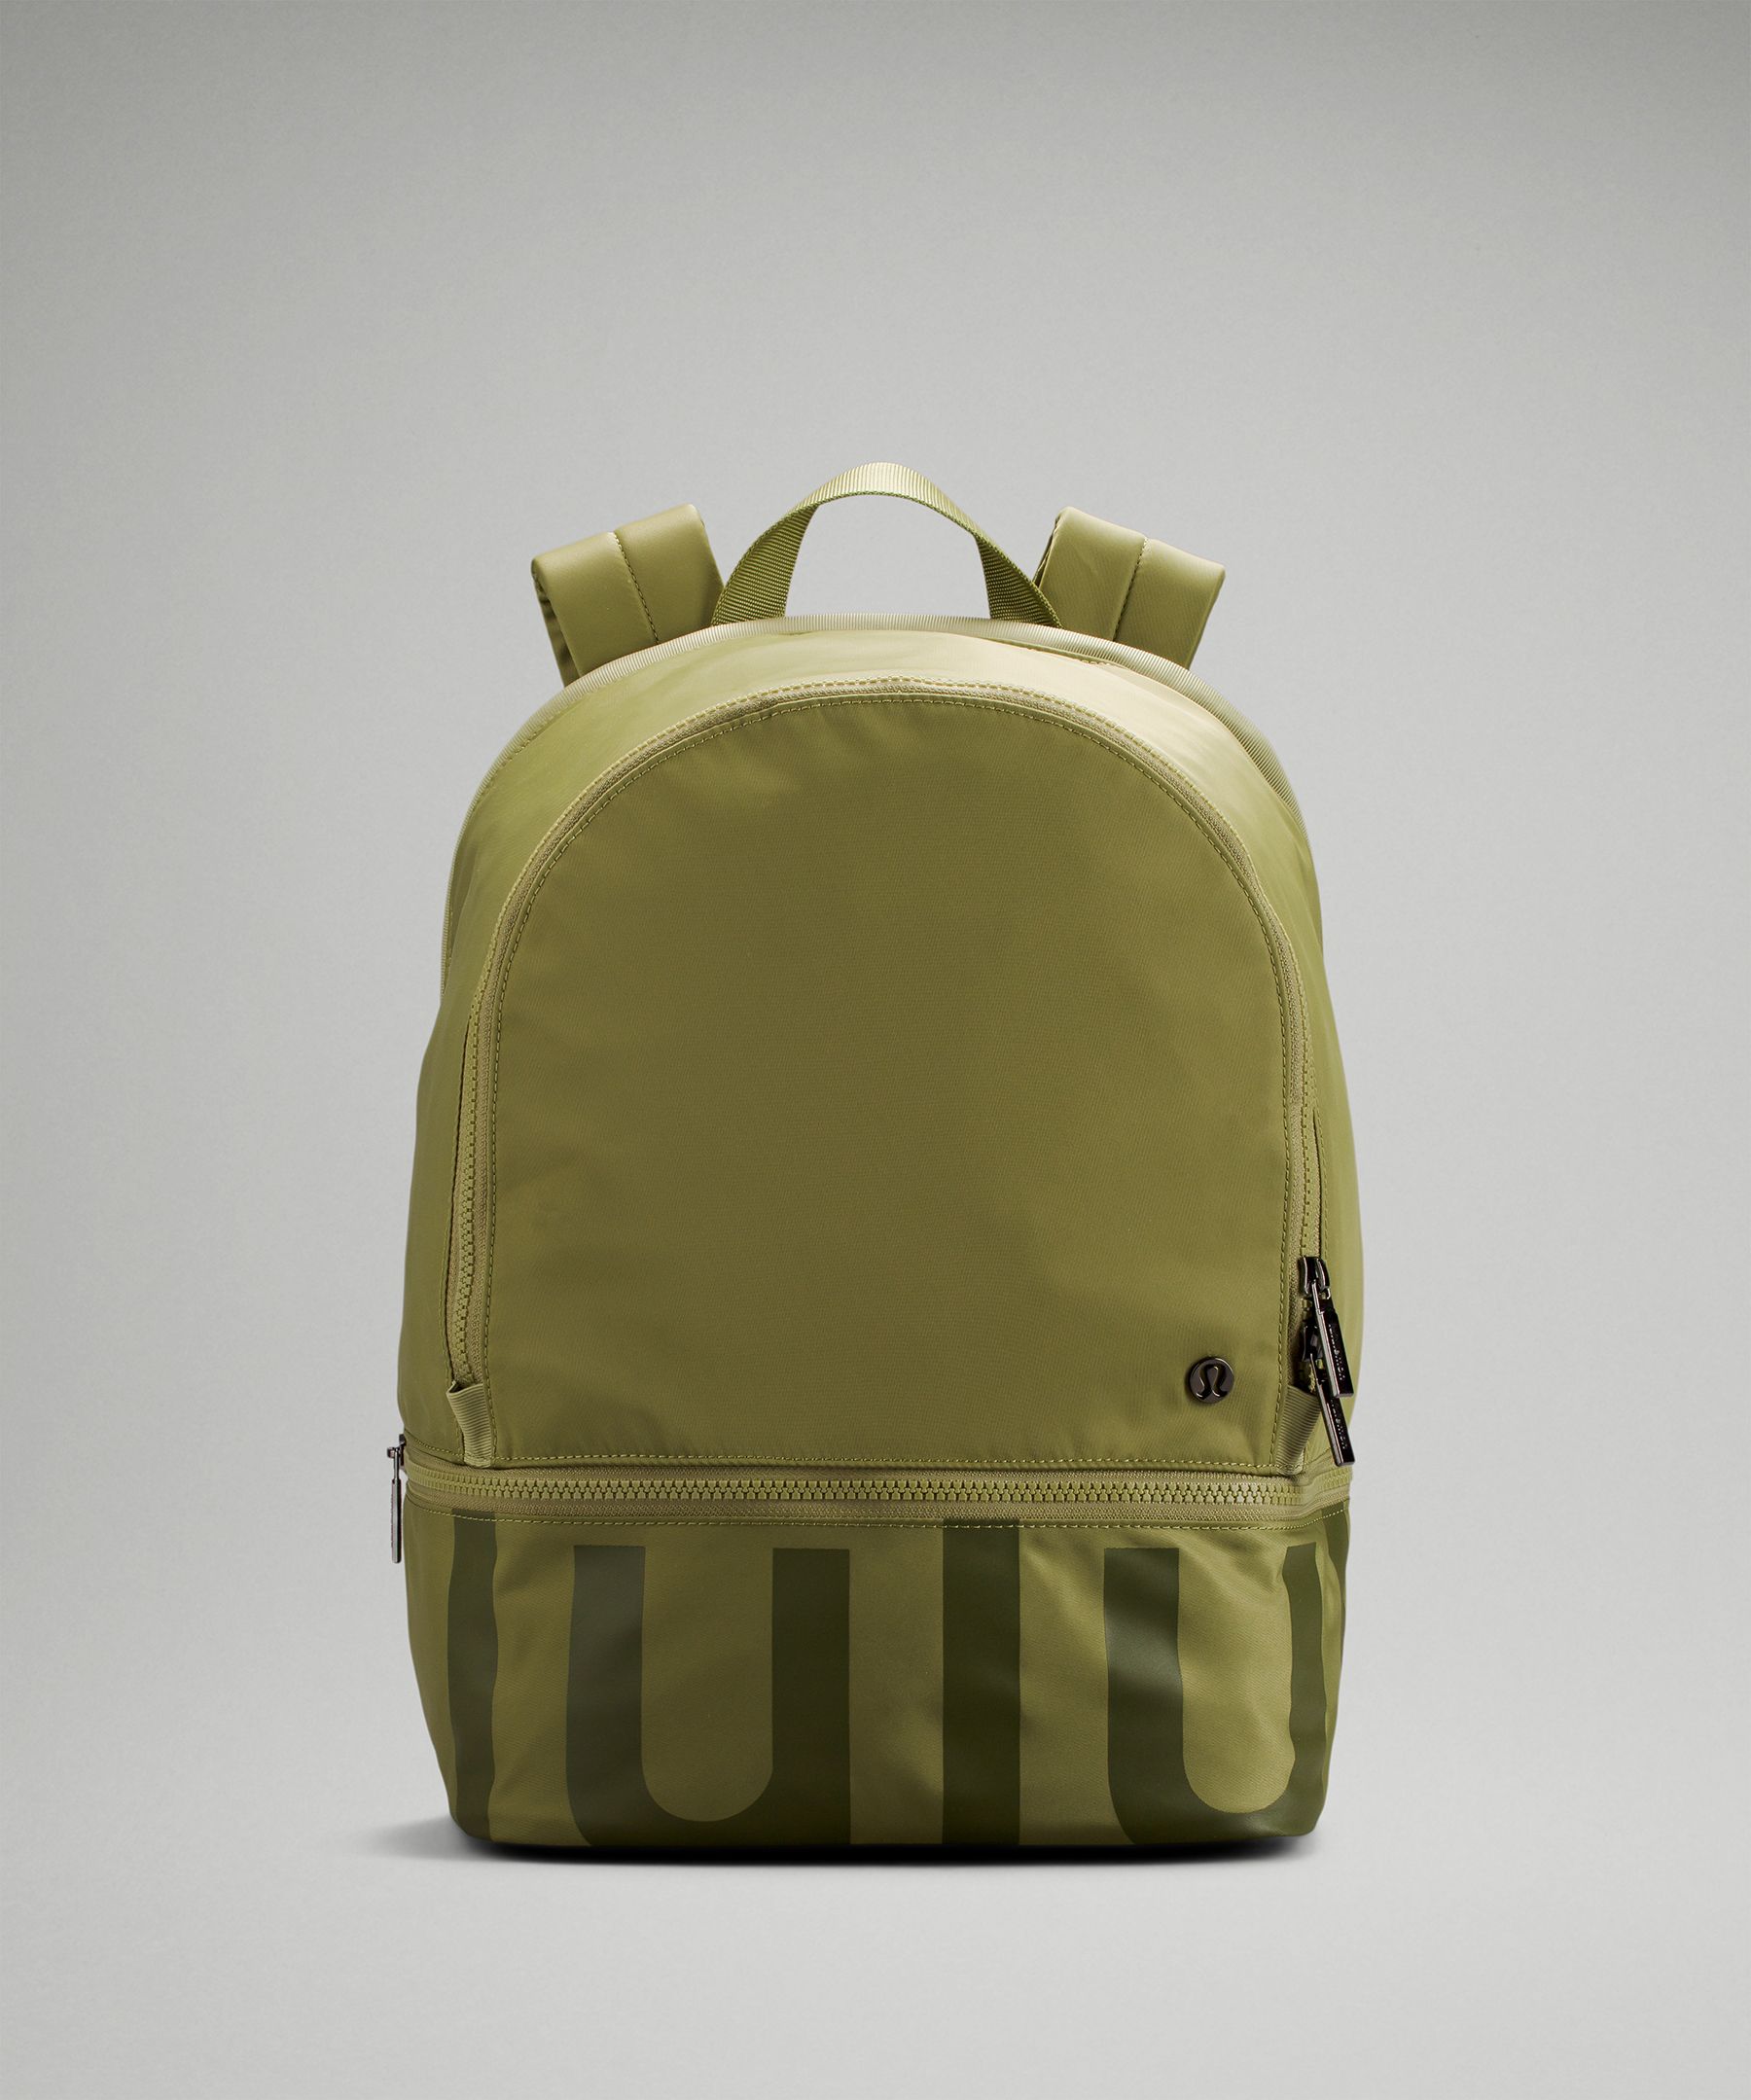 Lululemon City Adventurer Backpack 20l In Bronze Green